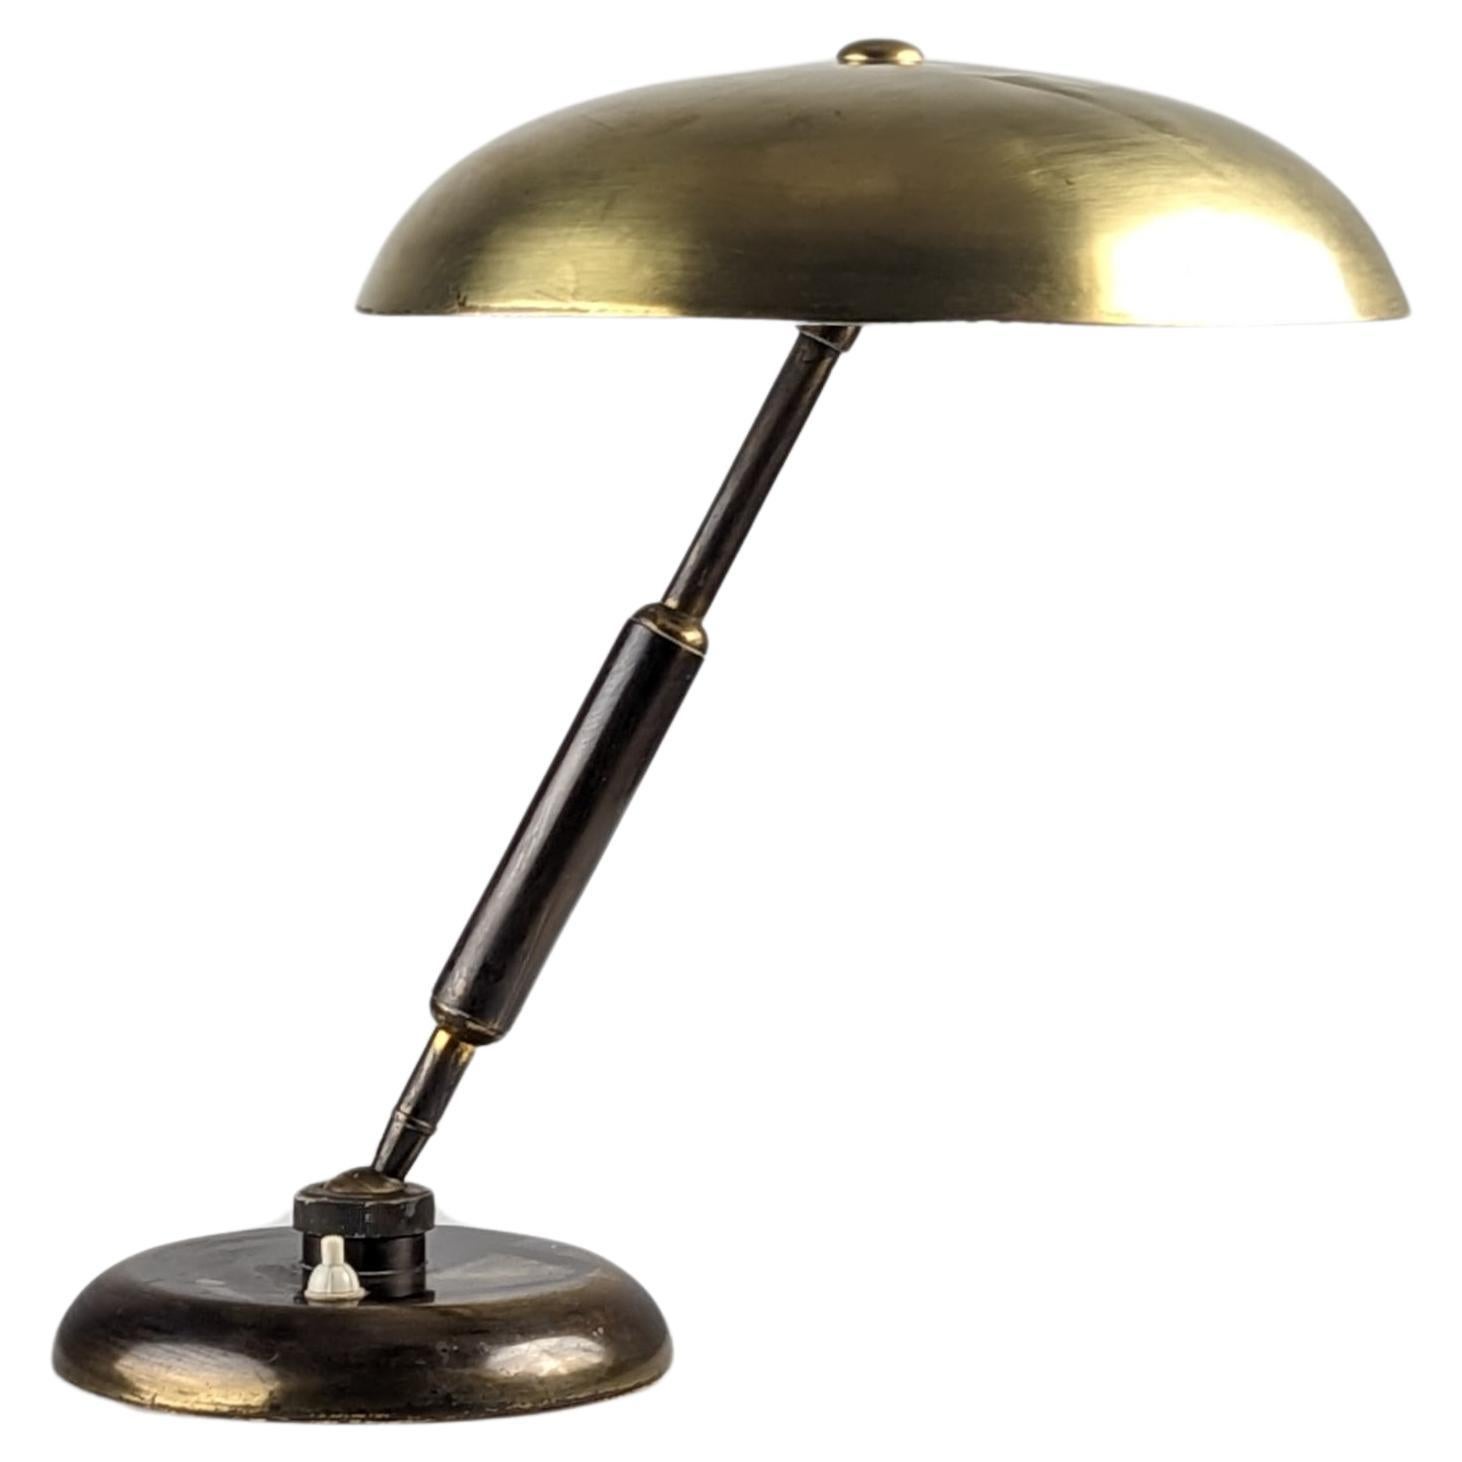 Mid Century table brass lamp by Oscar Torlasco for Lumi